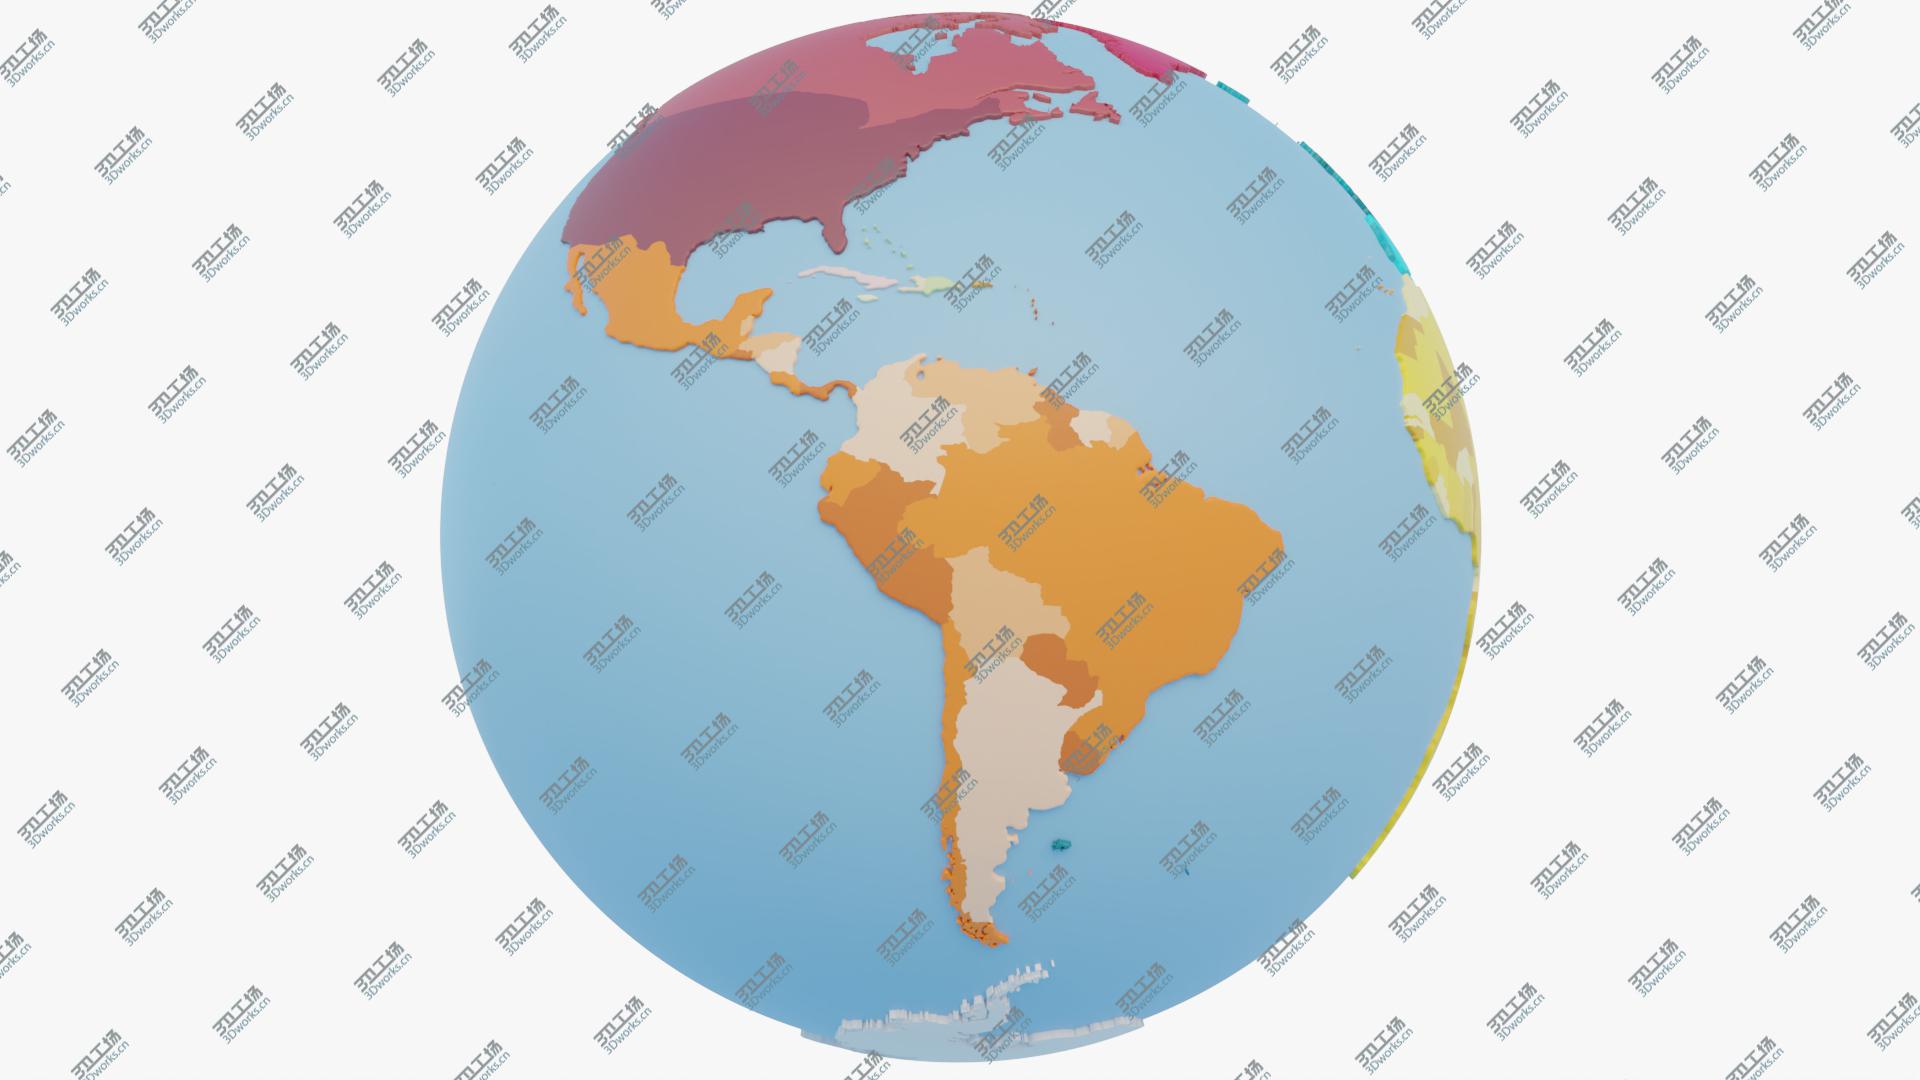 images/goods_img/2021040161/3D Geopolitical World Map/5.jpg